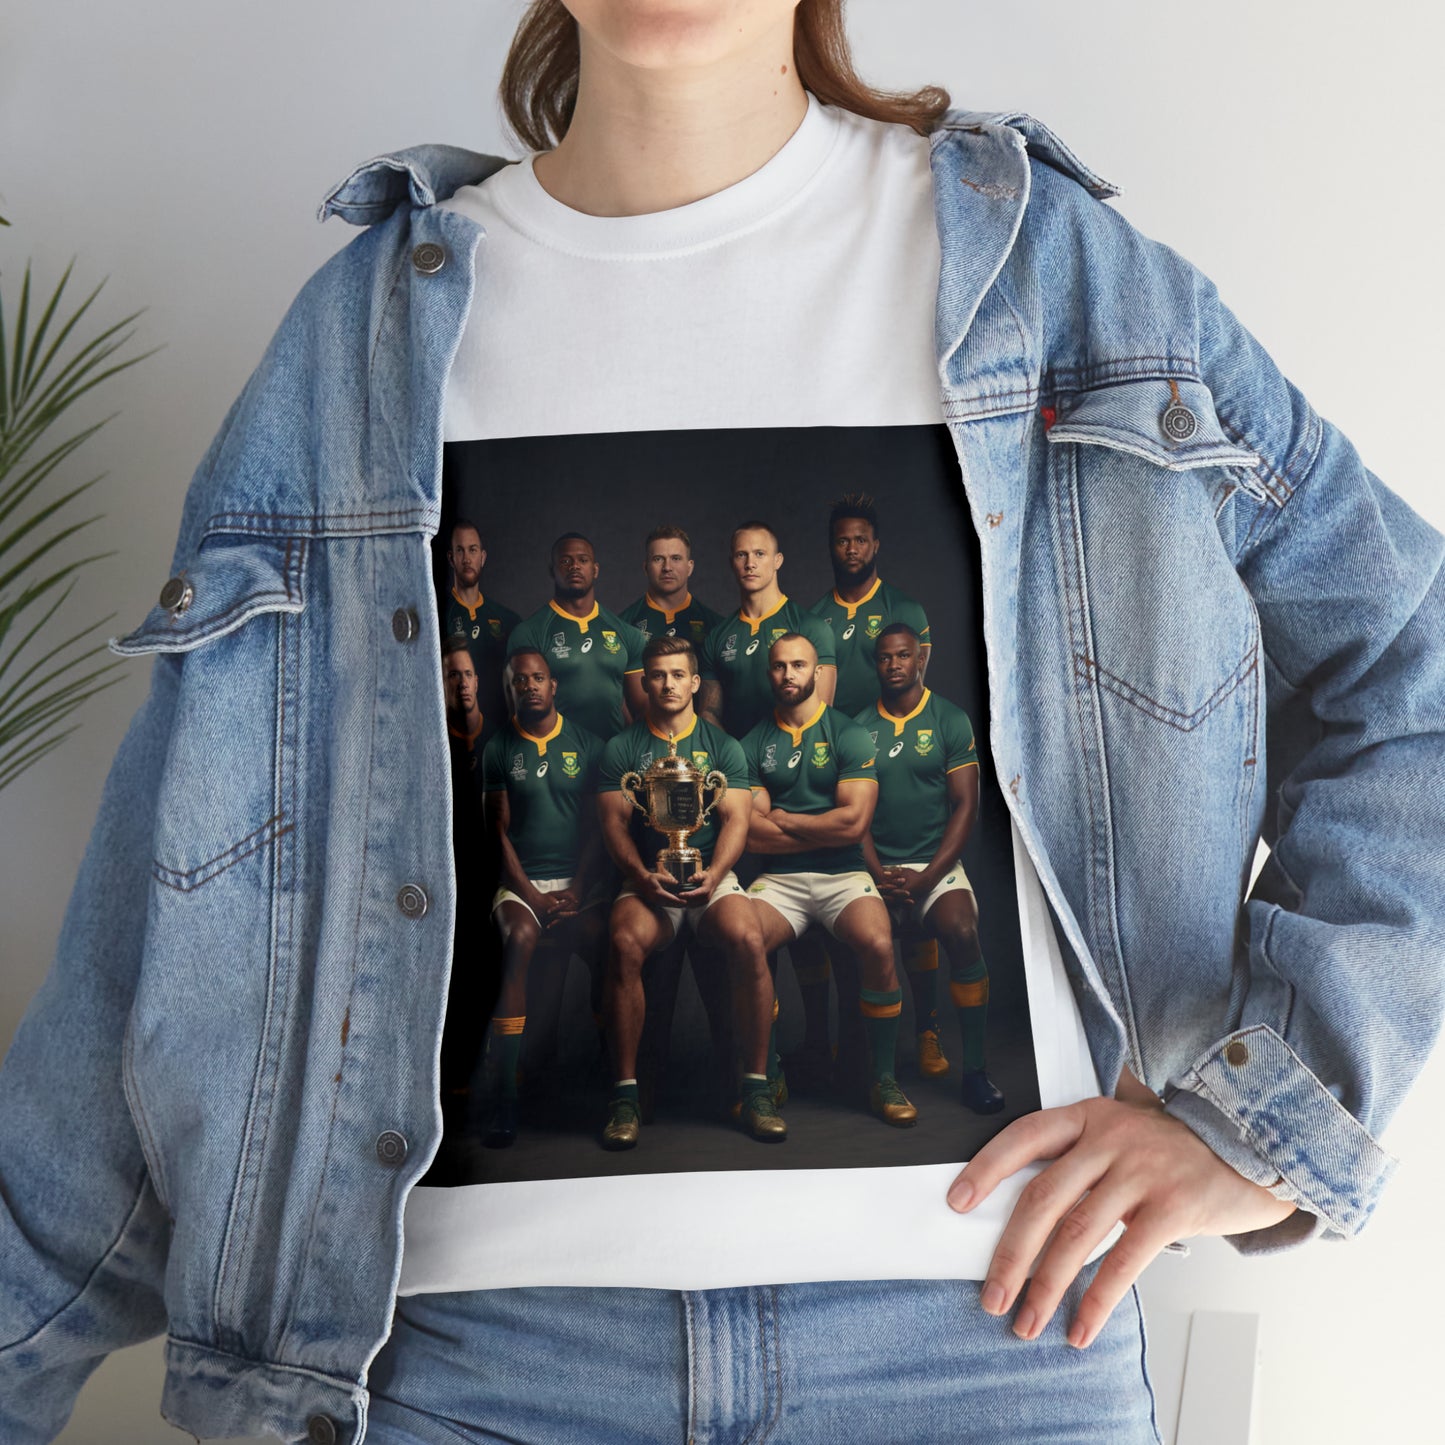 Springbok RWC photoshoot - light shirts